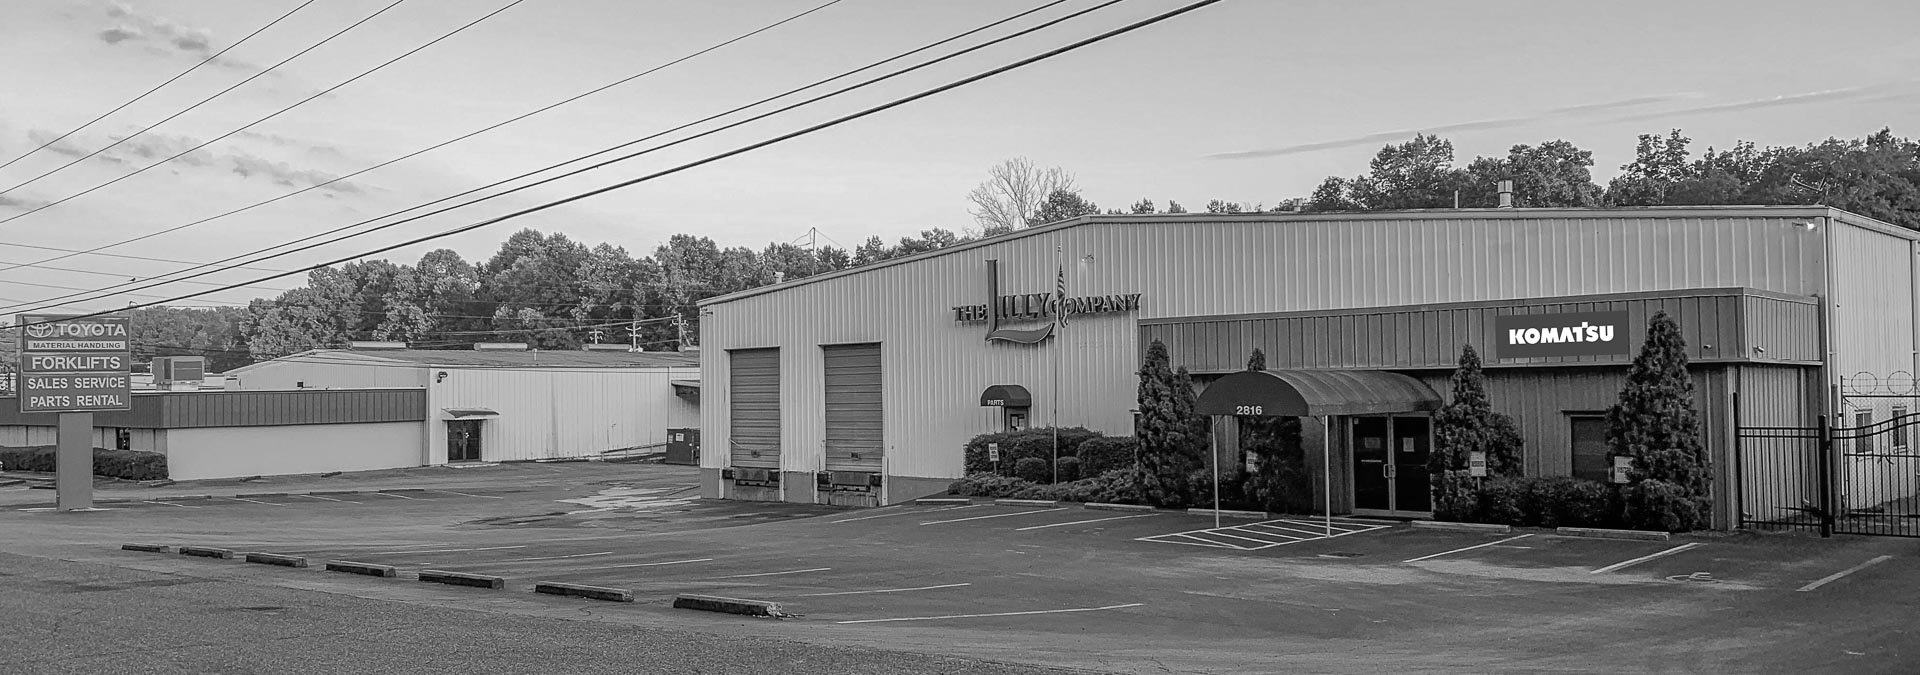 The Lilly Company, Irondale Alabama